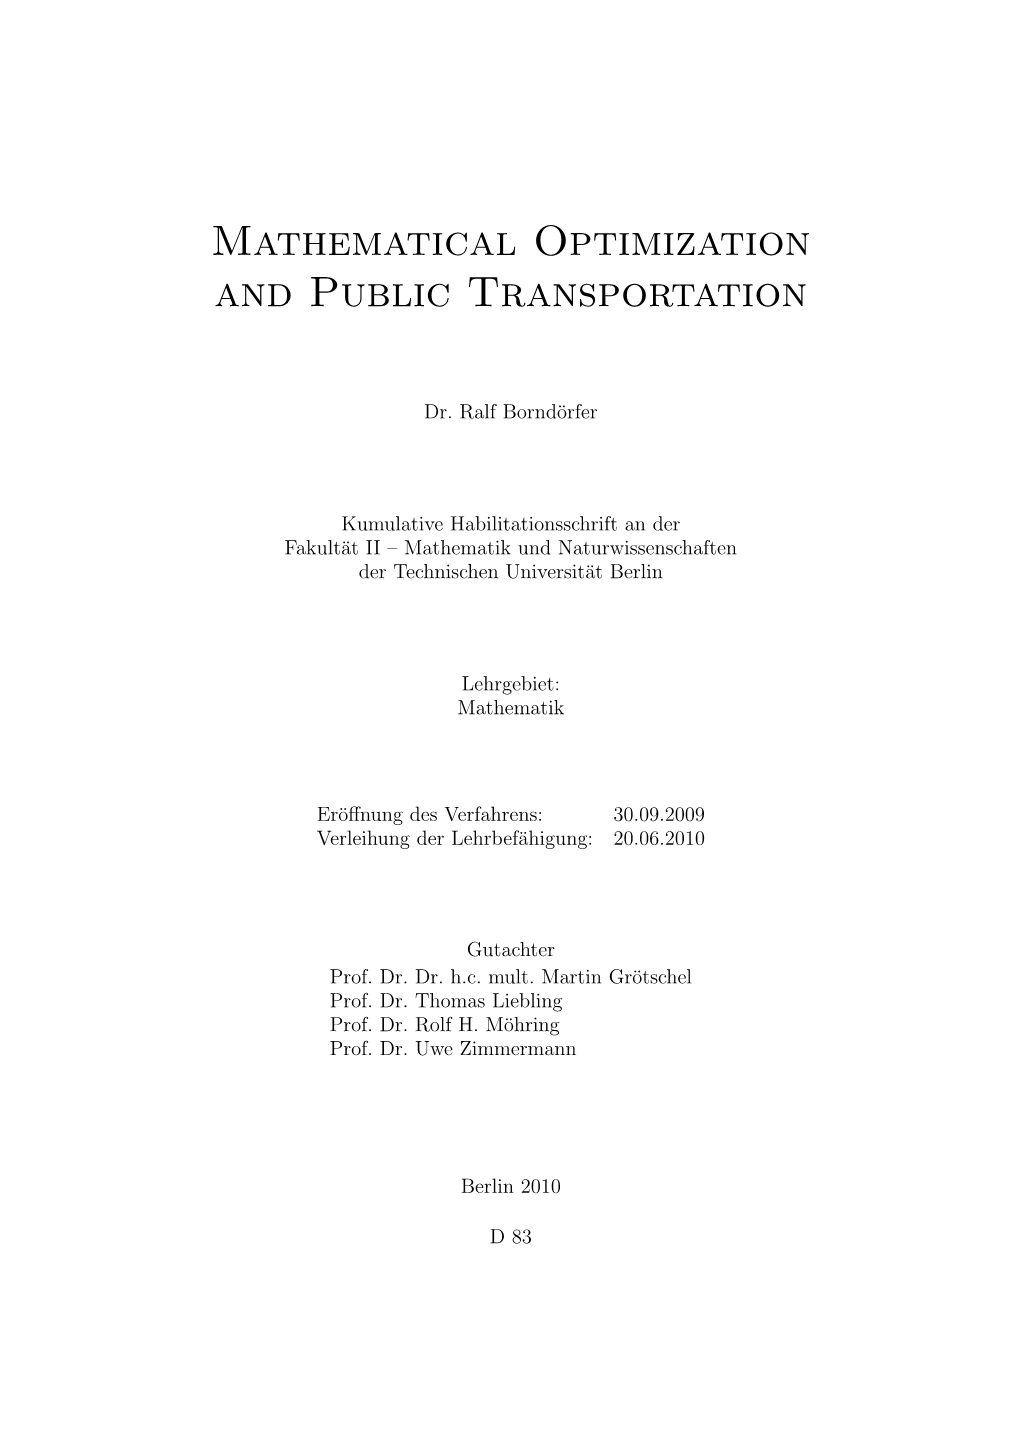 Mathematical Optimization and Public Transportation